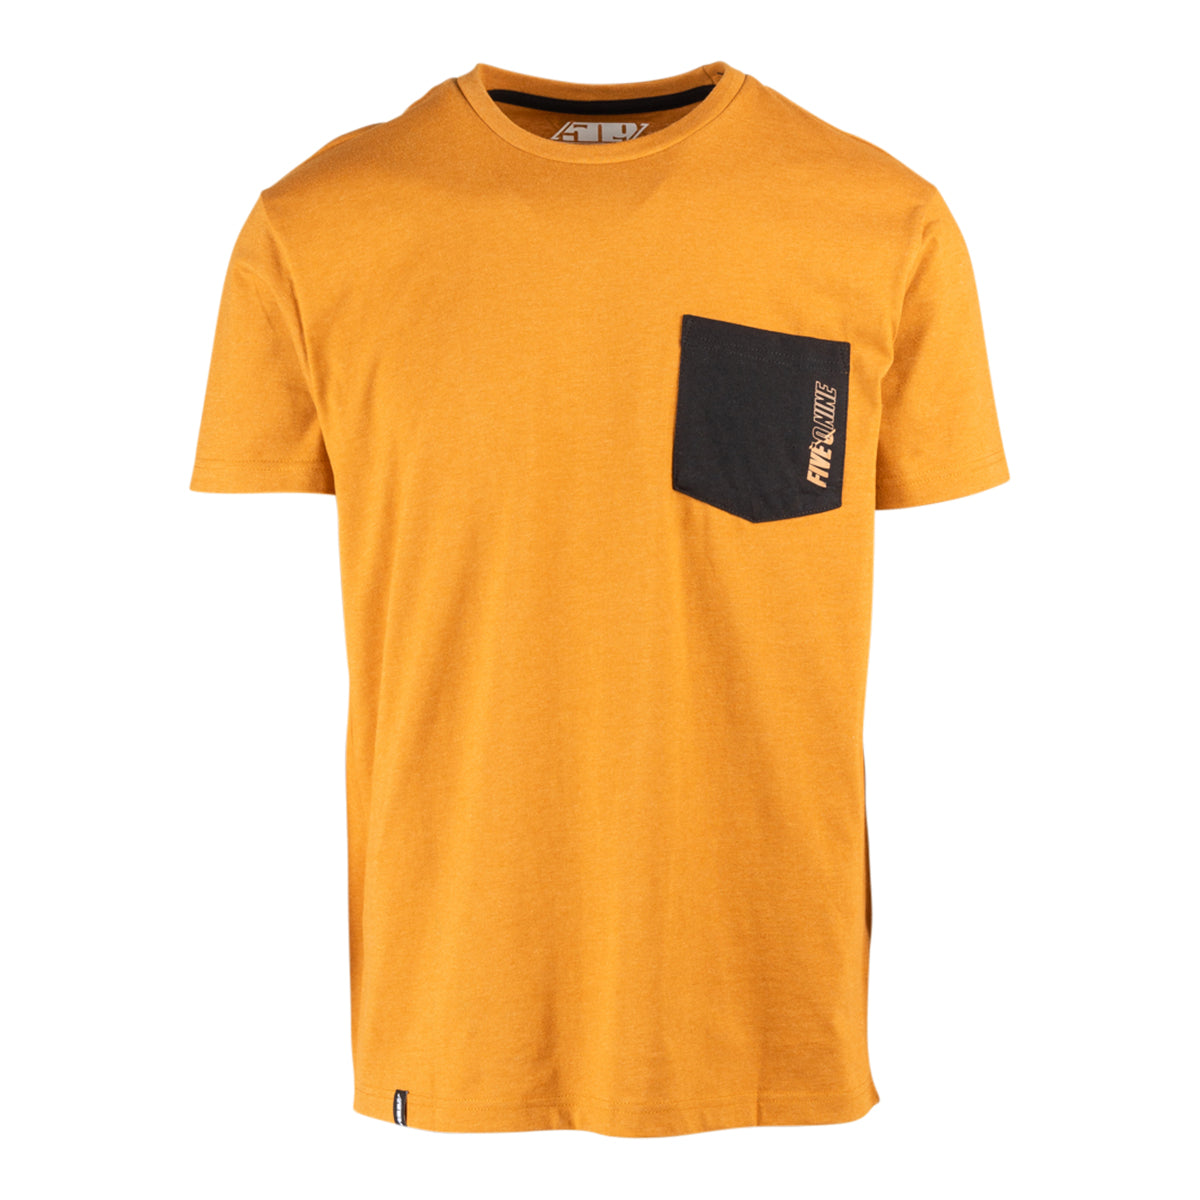 509 Arsenal Pocket T-Shirt F09001201-140-901